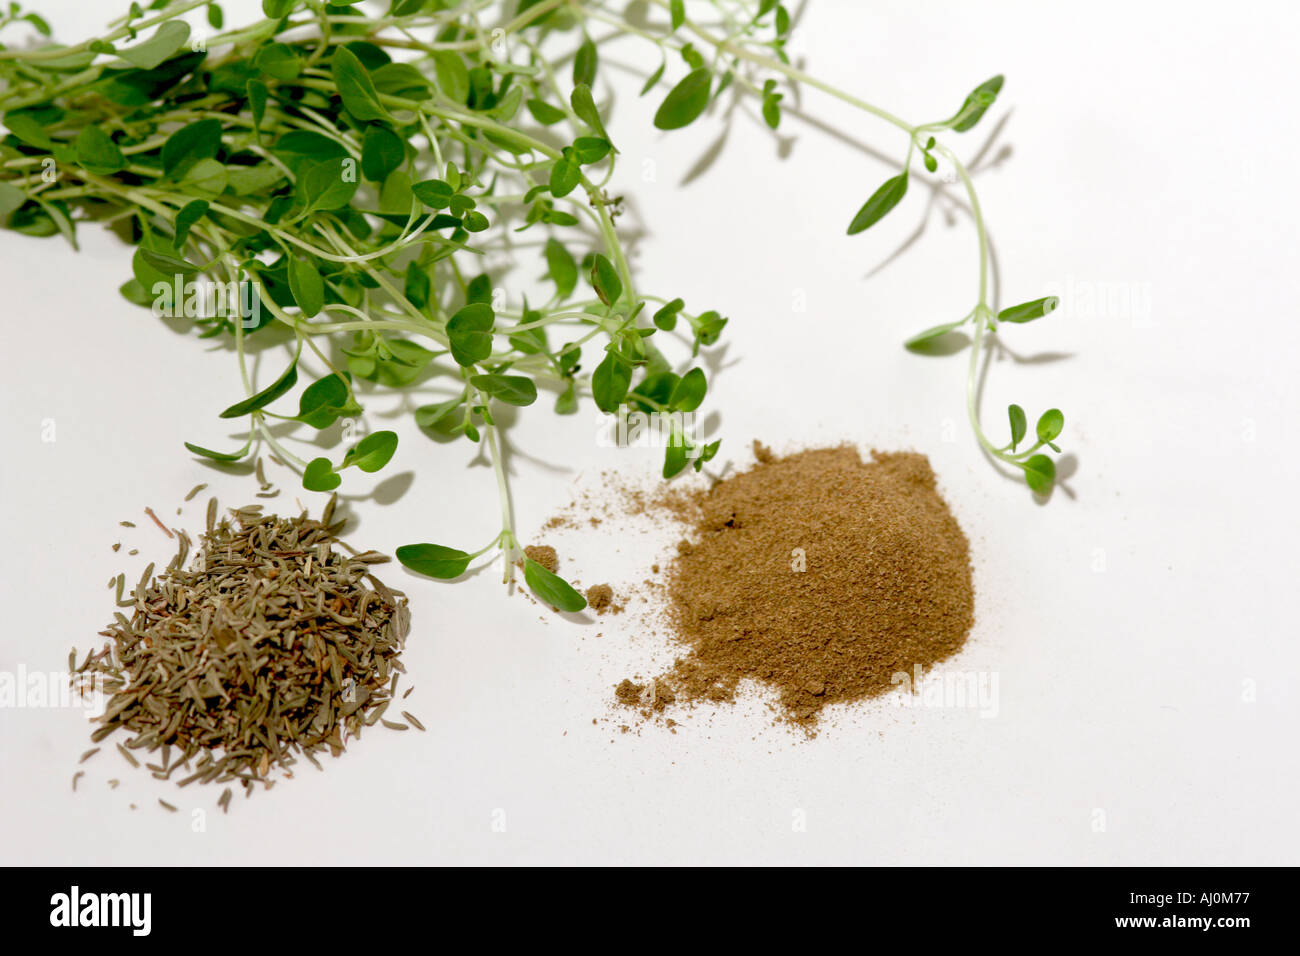 Creeping Thyme Plant Genus Thymus Herbal Seasoning Dried Chopped Ground Spices Stock Photo